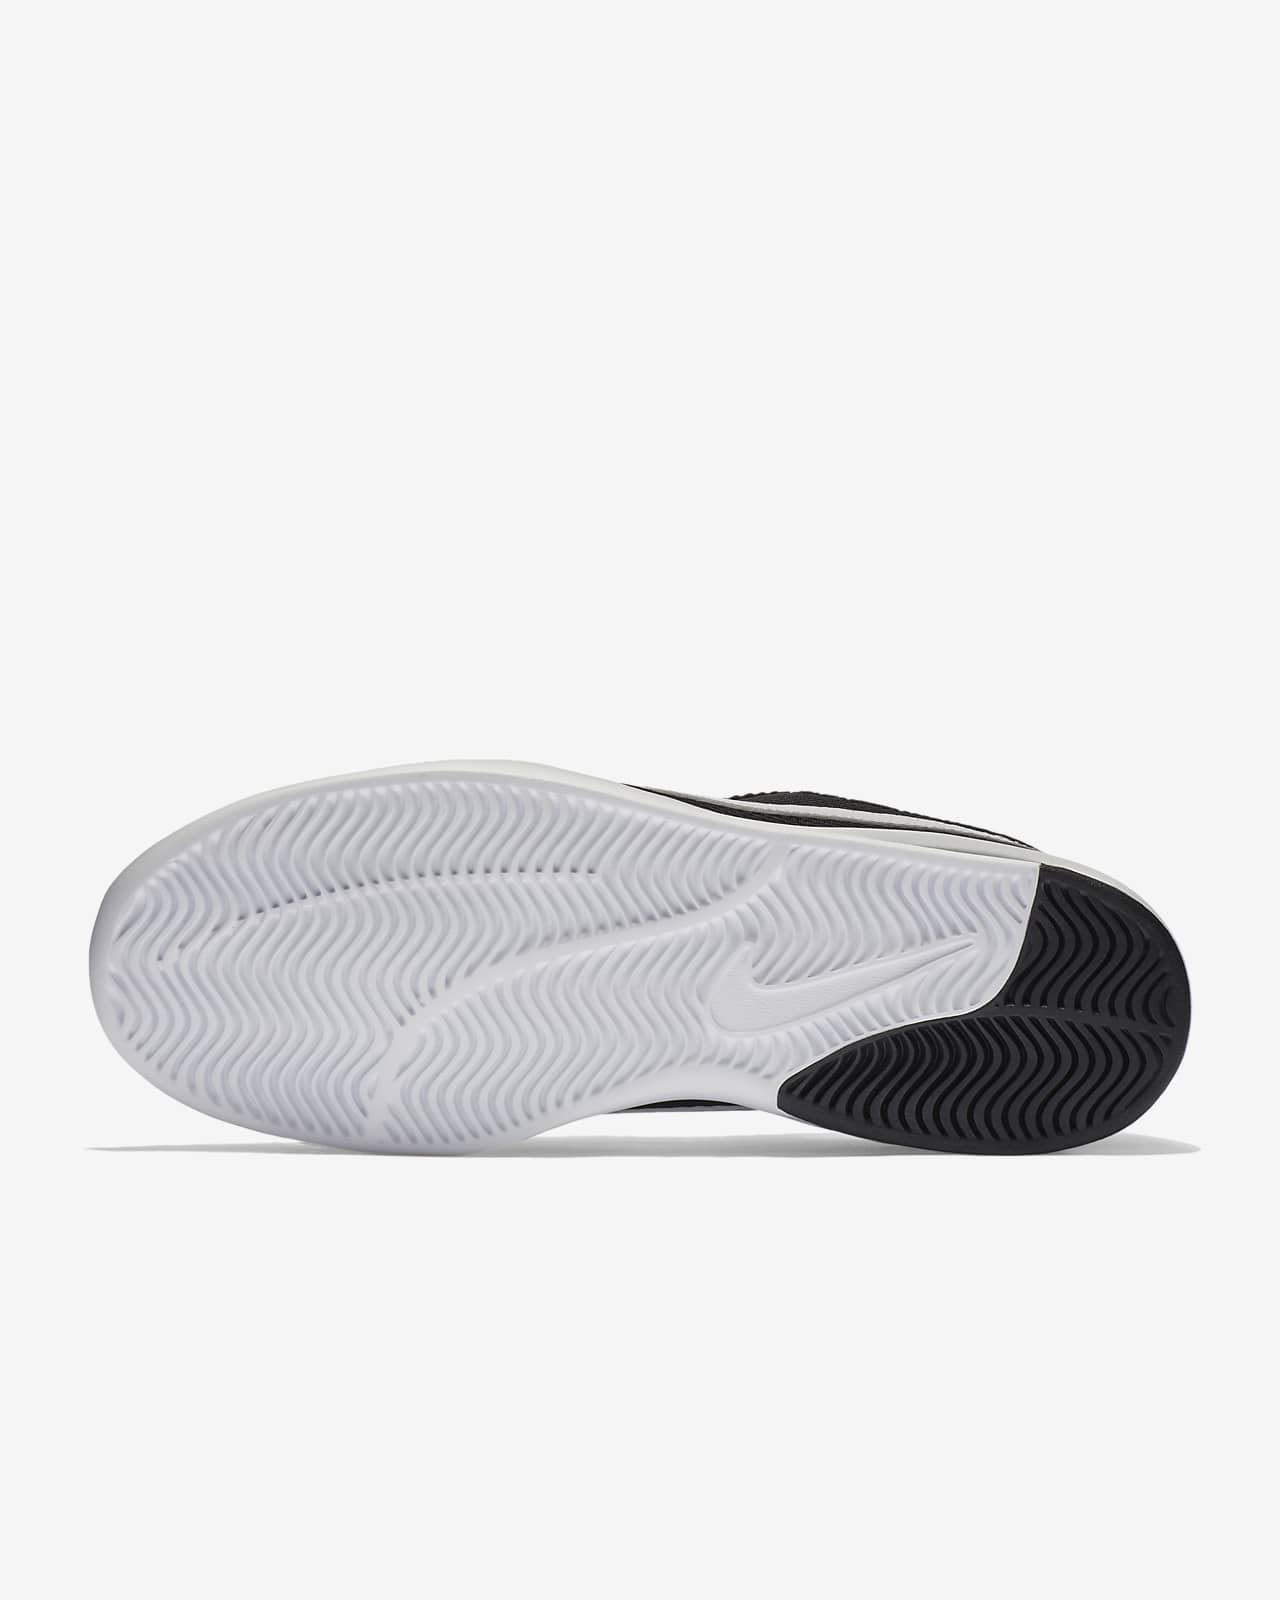 Nike SB Air Max Bruin Vapor Men's Skate Shoe